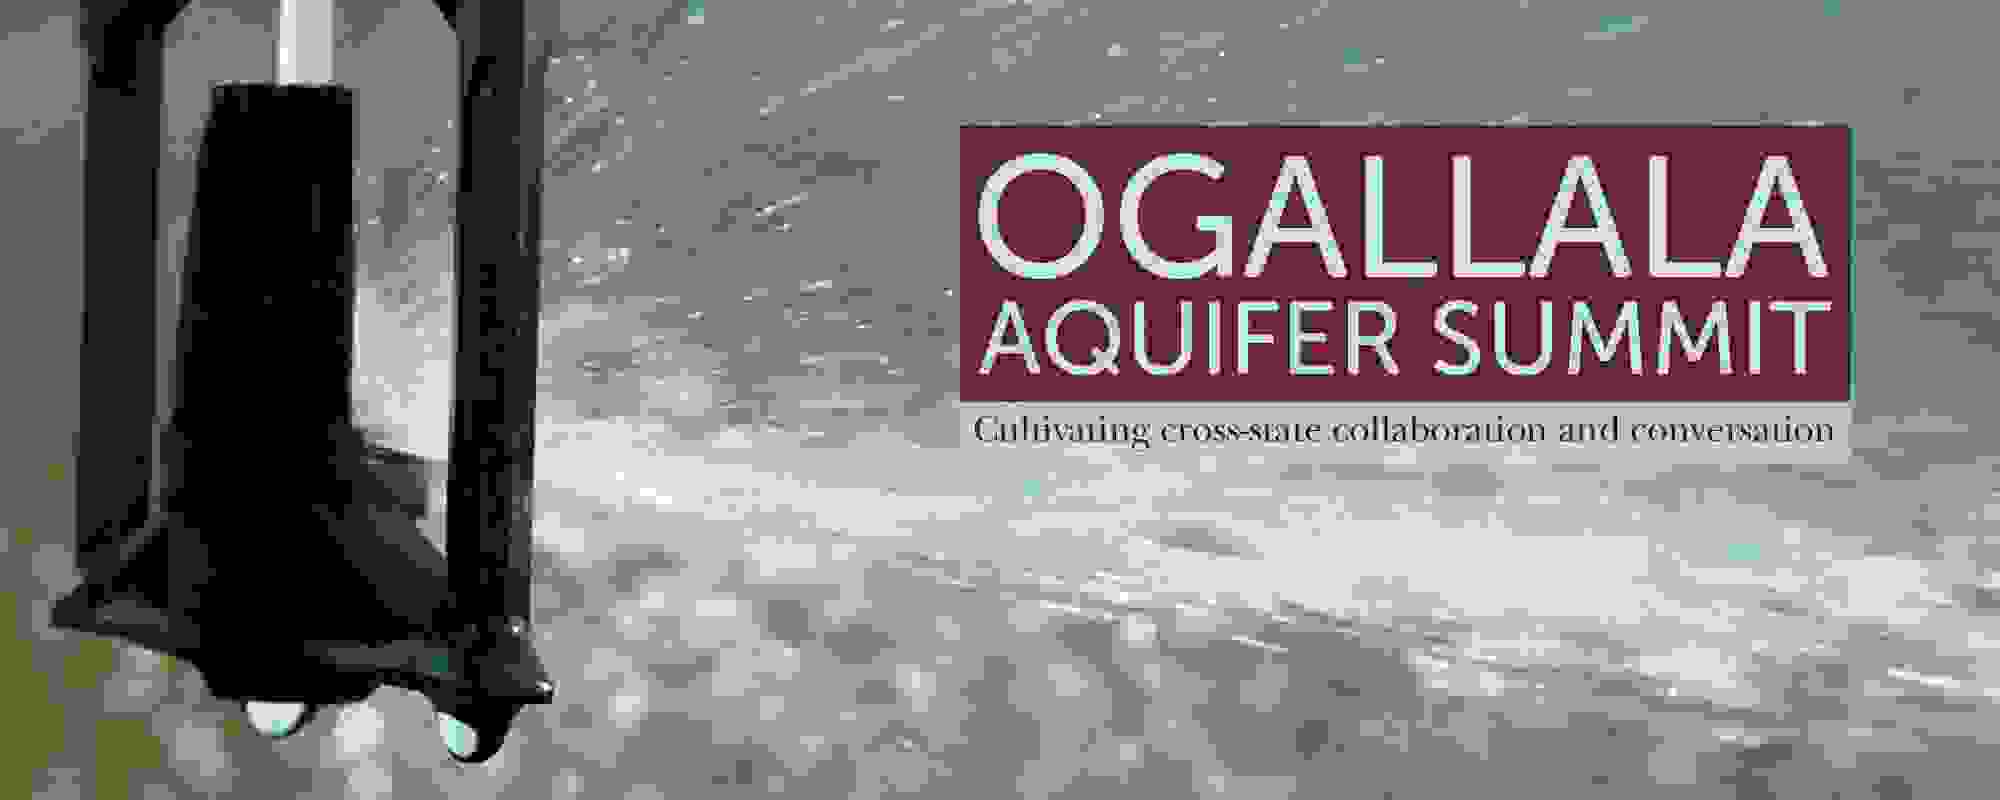 Ogallala Aquifer Summit